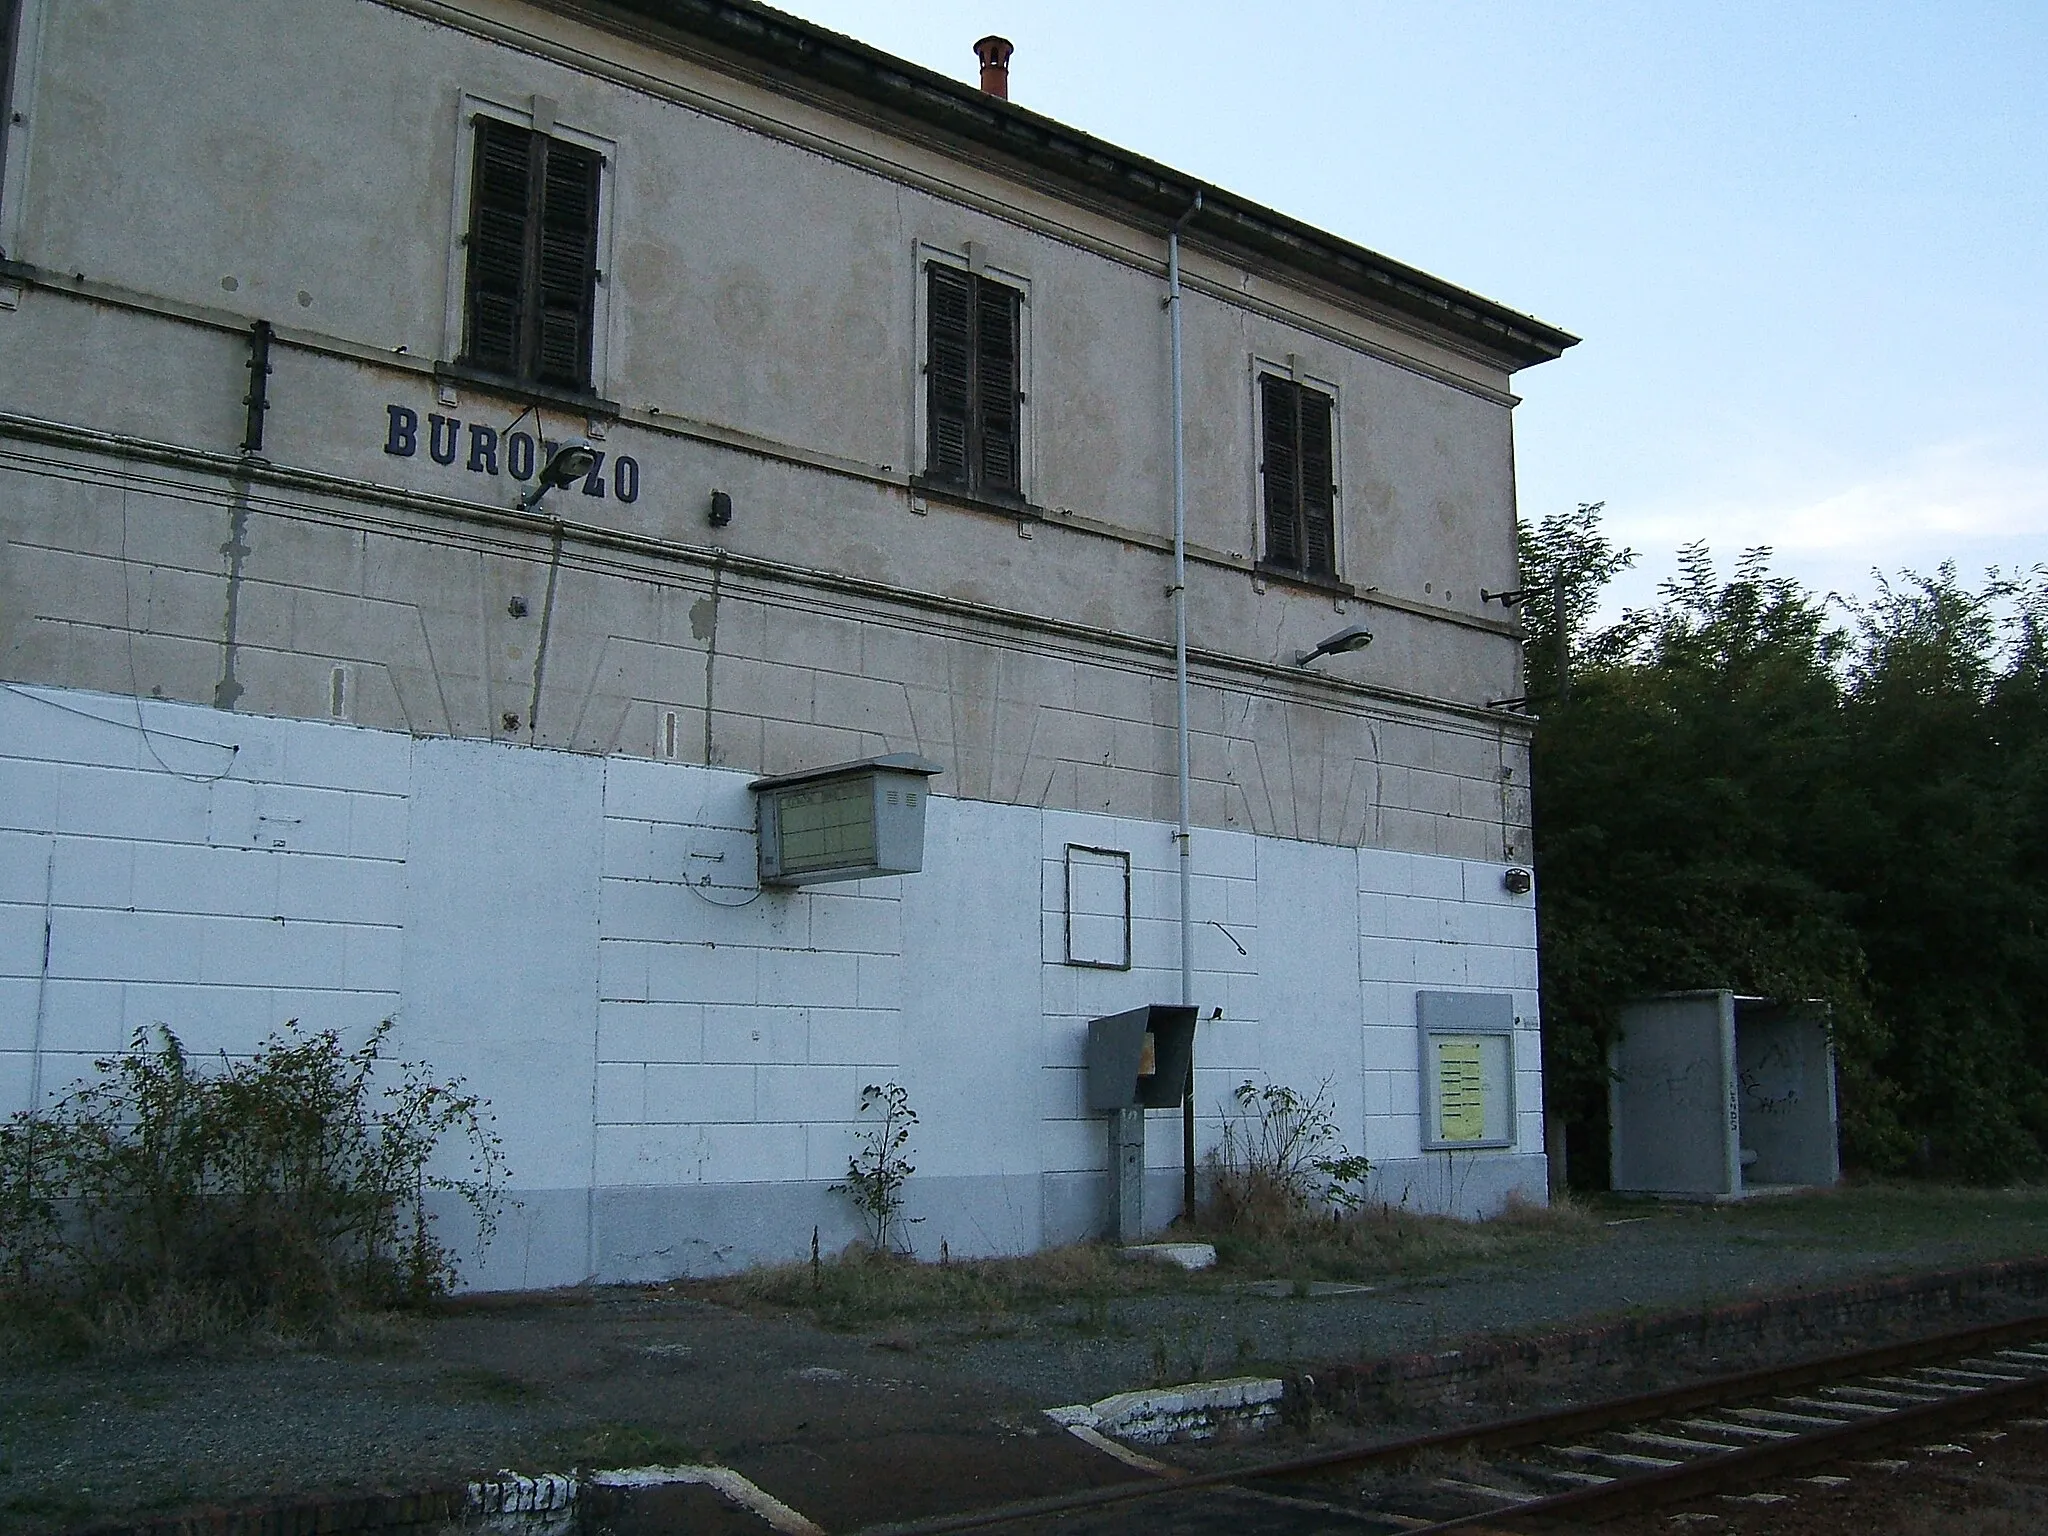 Photo showing: Buronzo, Piemonte, Italia Buronzo station